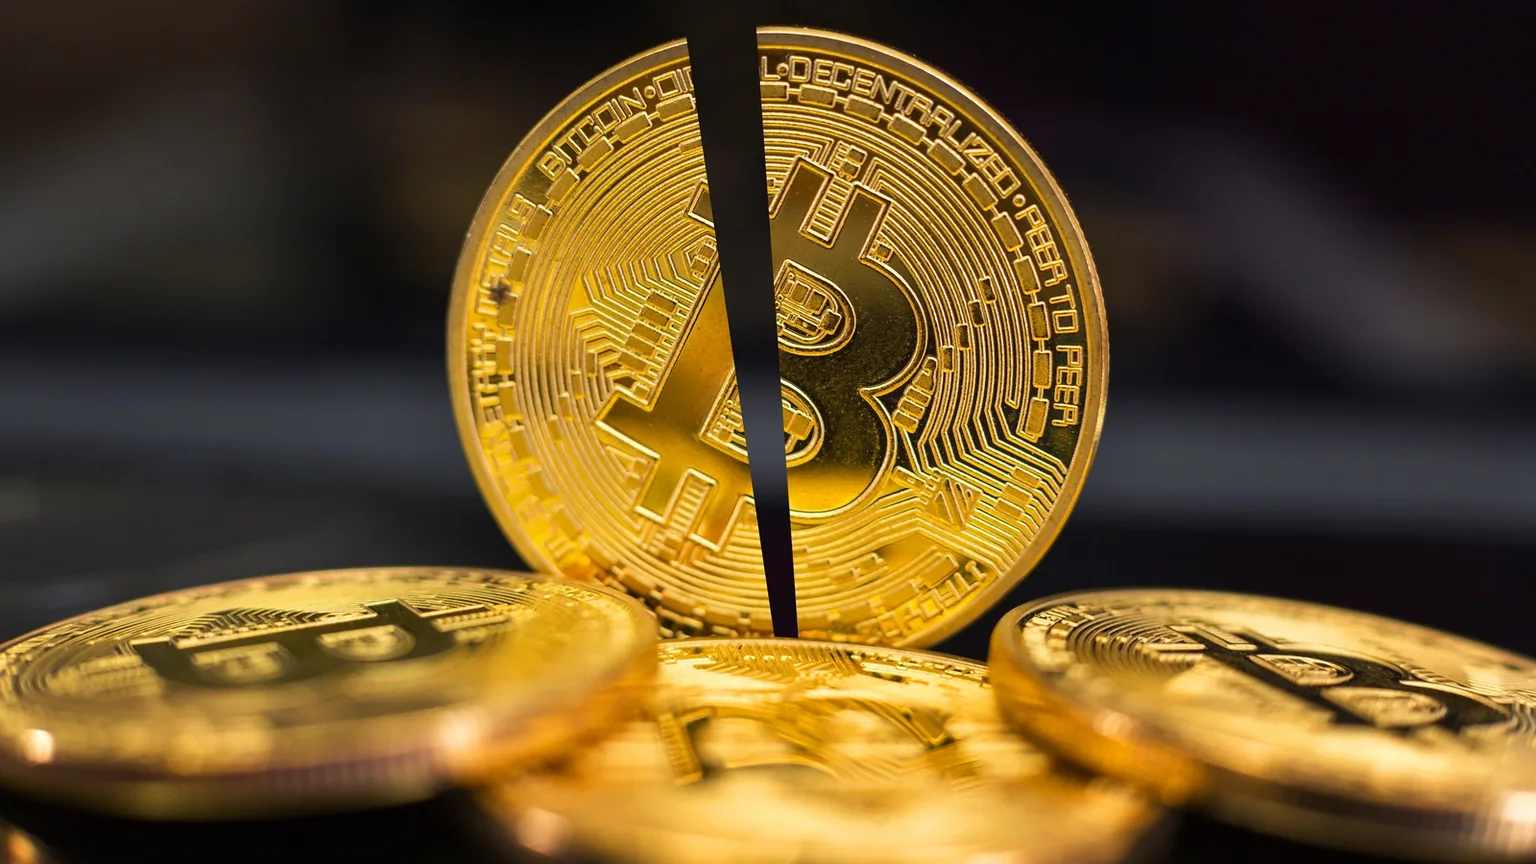 Gold Bitcoin Token split in half